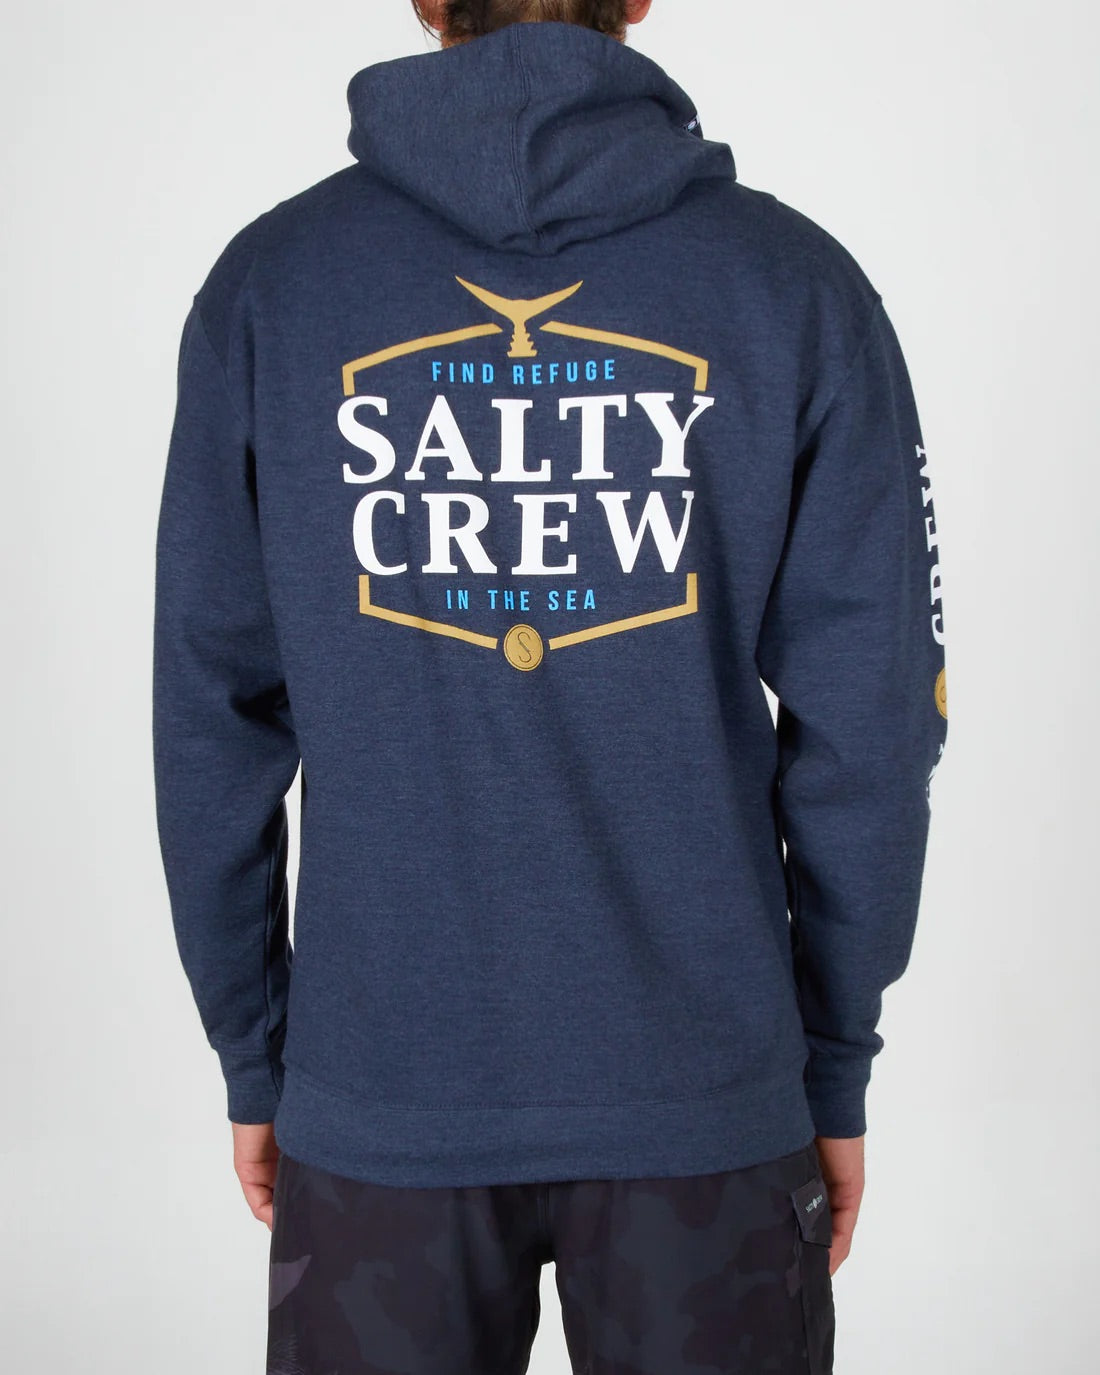 Salty Crew - Skipjack Hooded Fleece